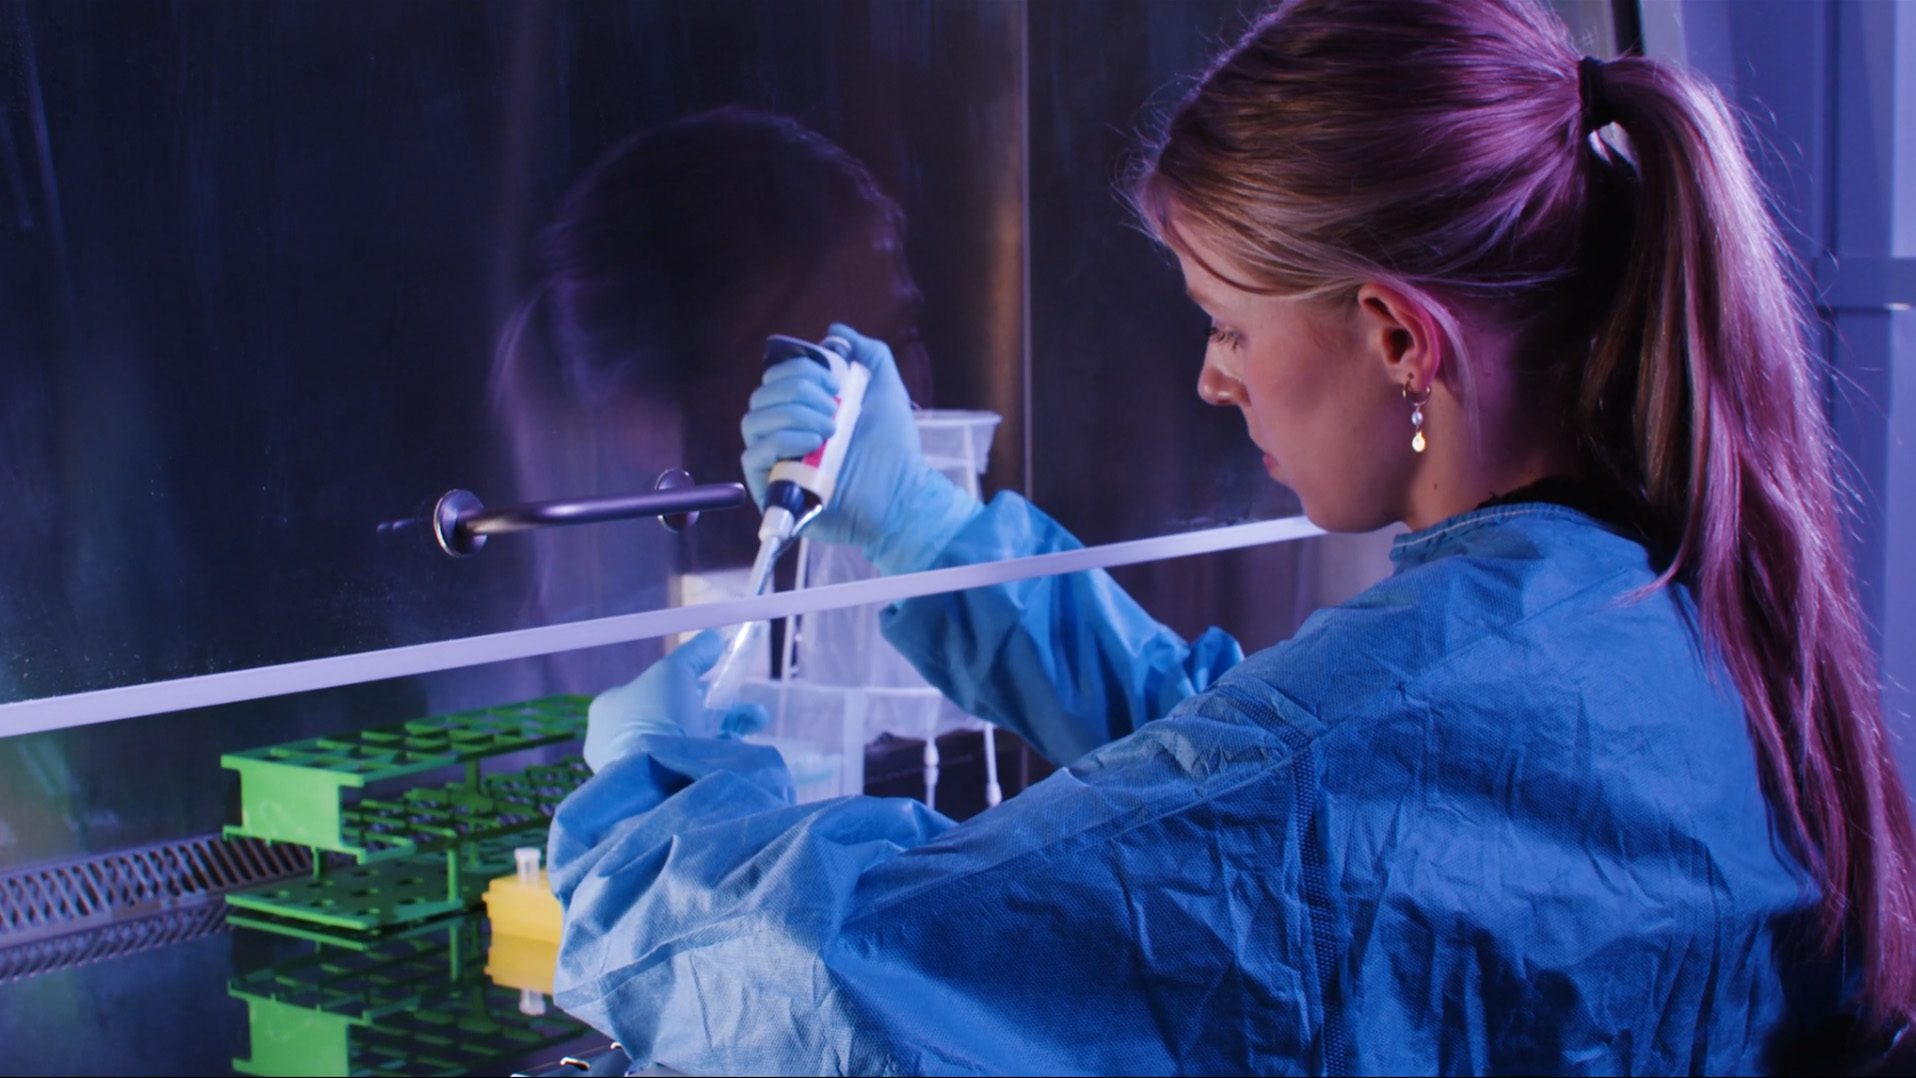 A female researcher working in a laboratory